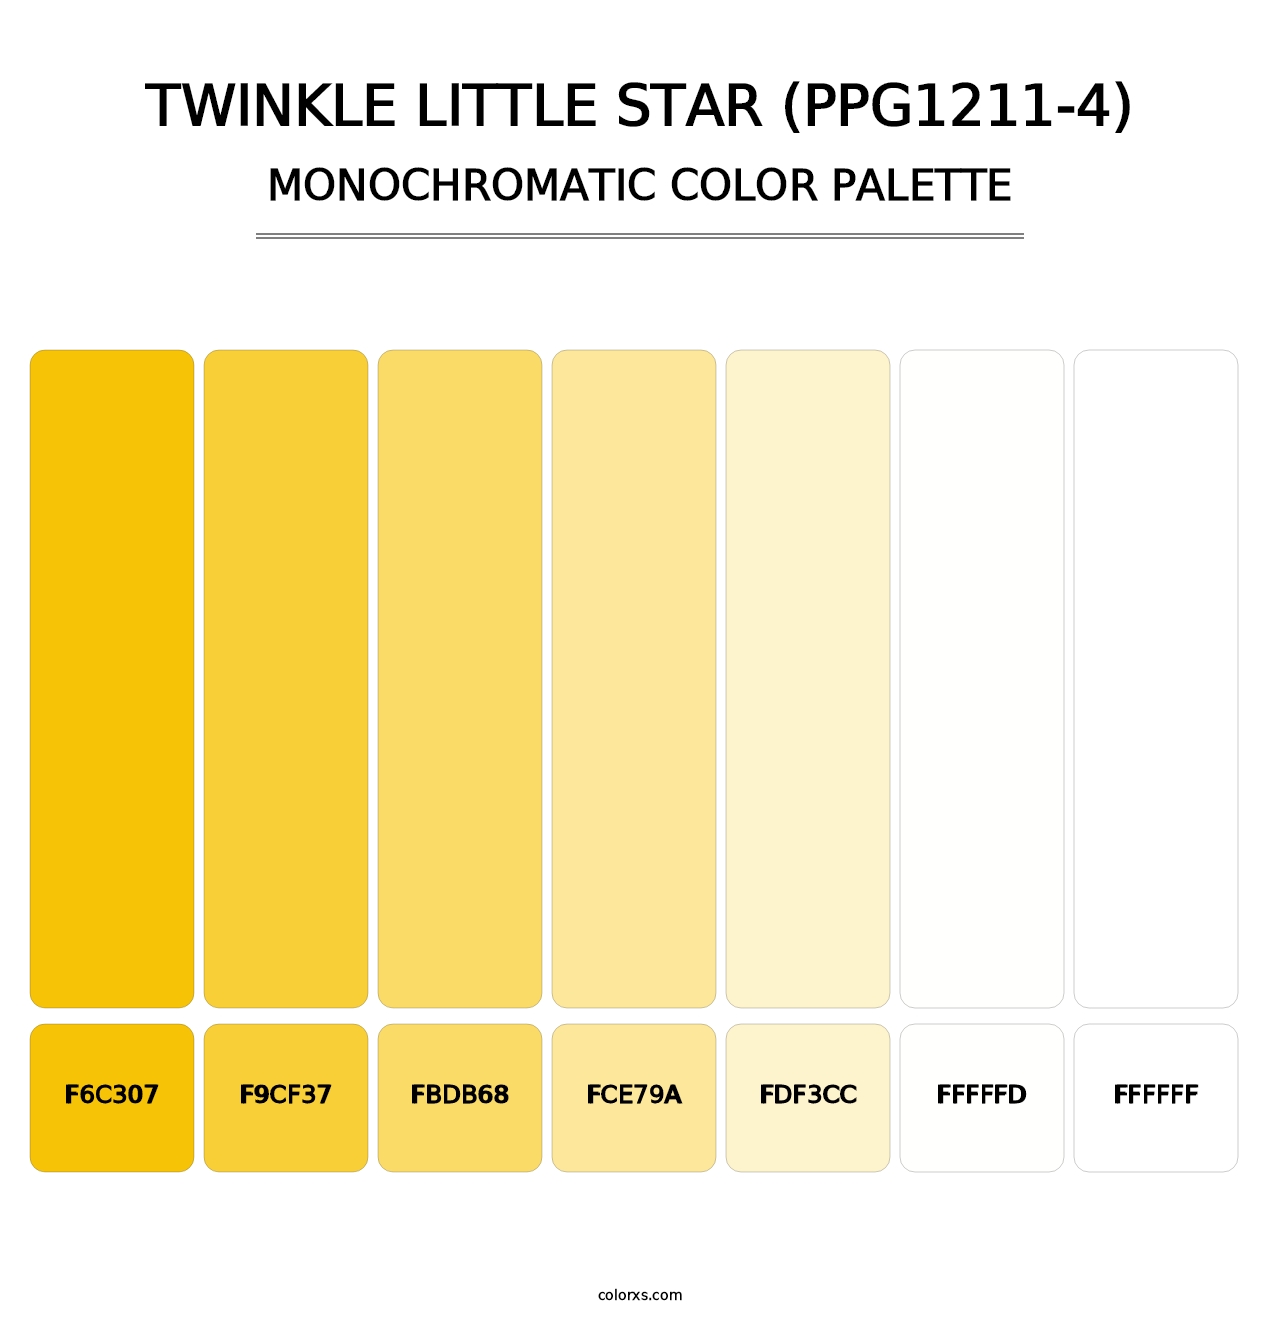 Twinkle Little Star (PPG1211-4) - Monochromatic Color Palette